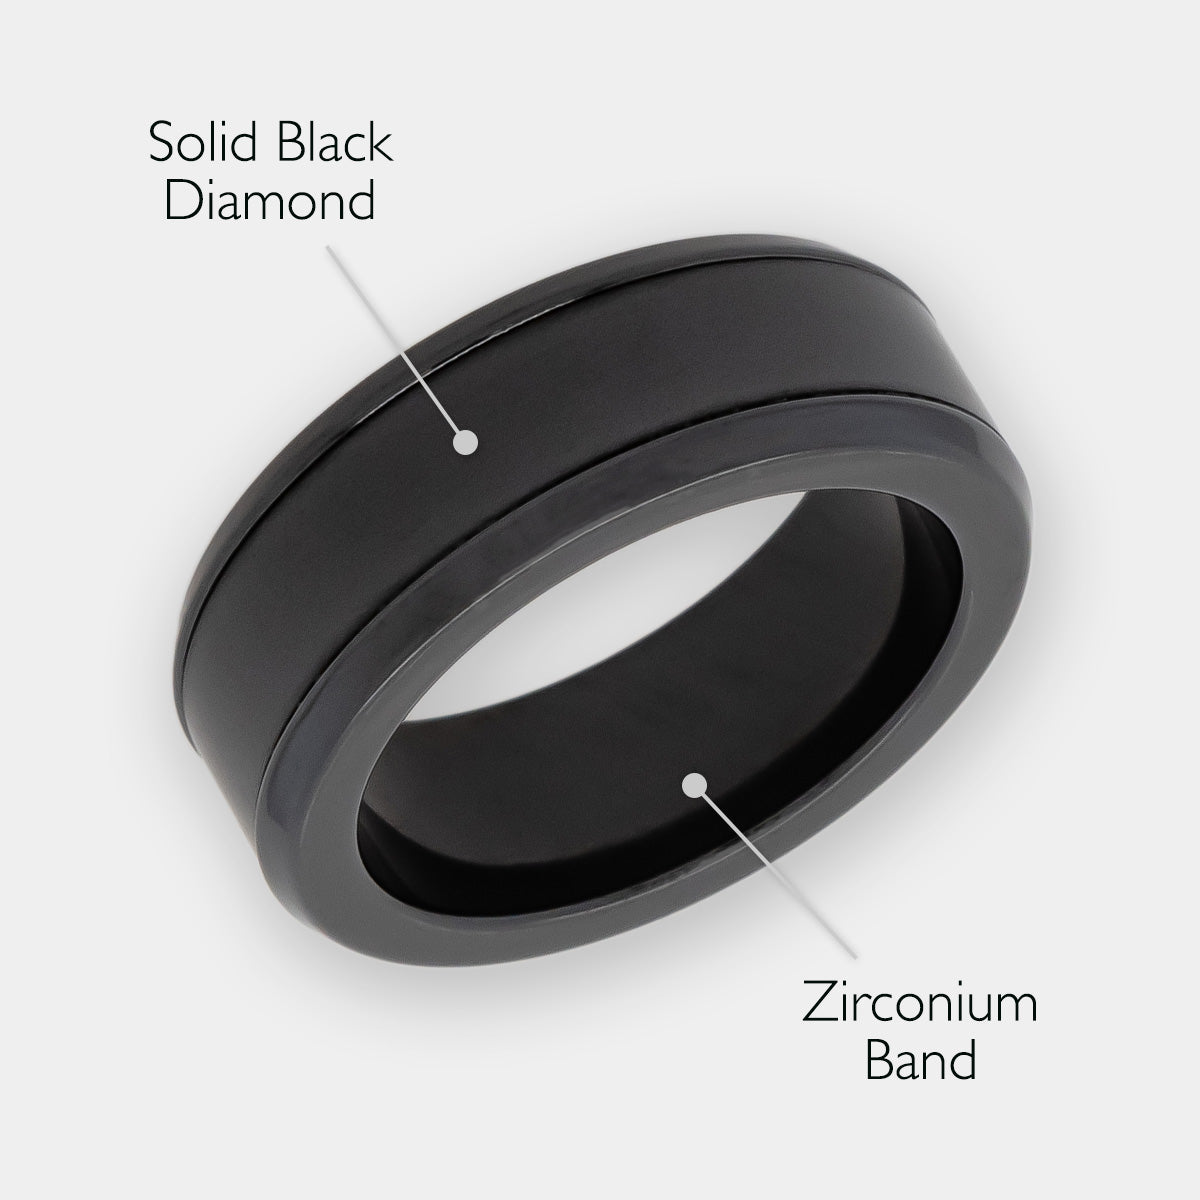 ACTEON 8mm - Size 9 - Satin Finish Zirconium w/ Black Diamond Inlay - SHIPS WITHIN 2 BUSINESS DAYS